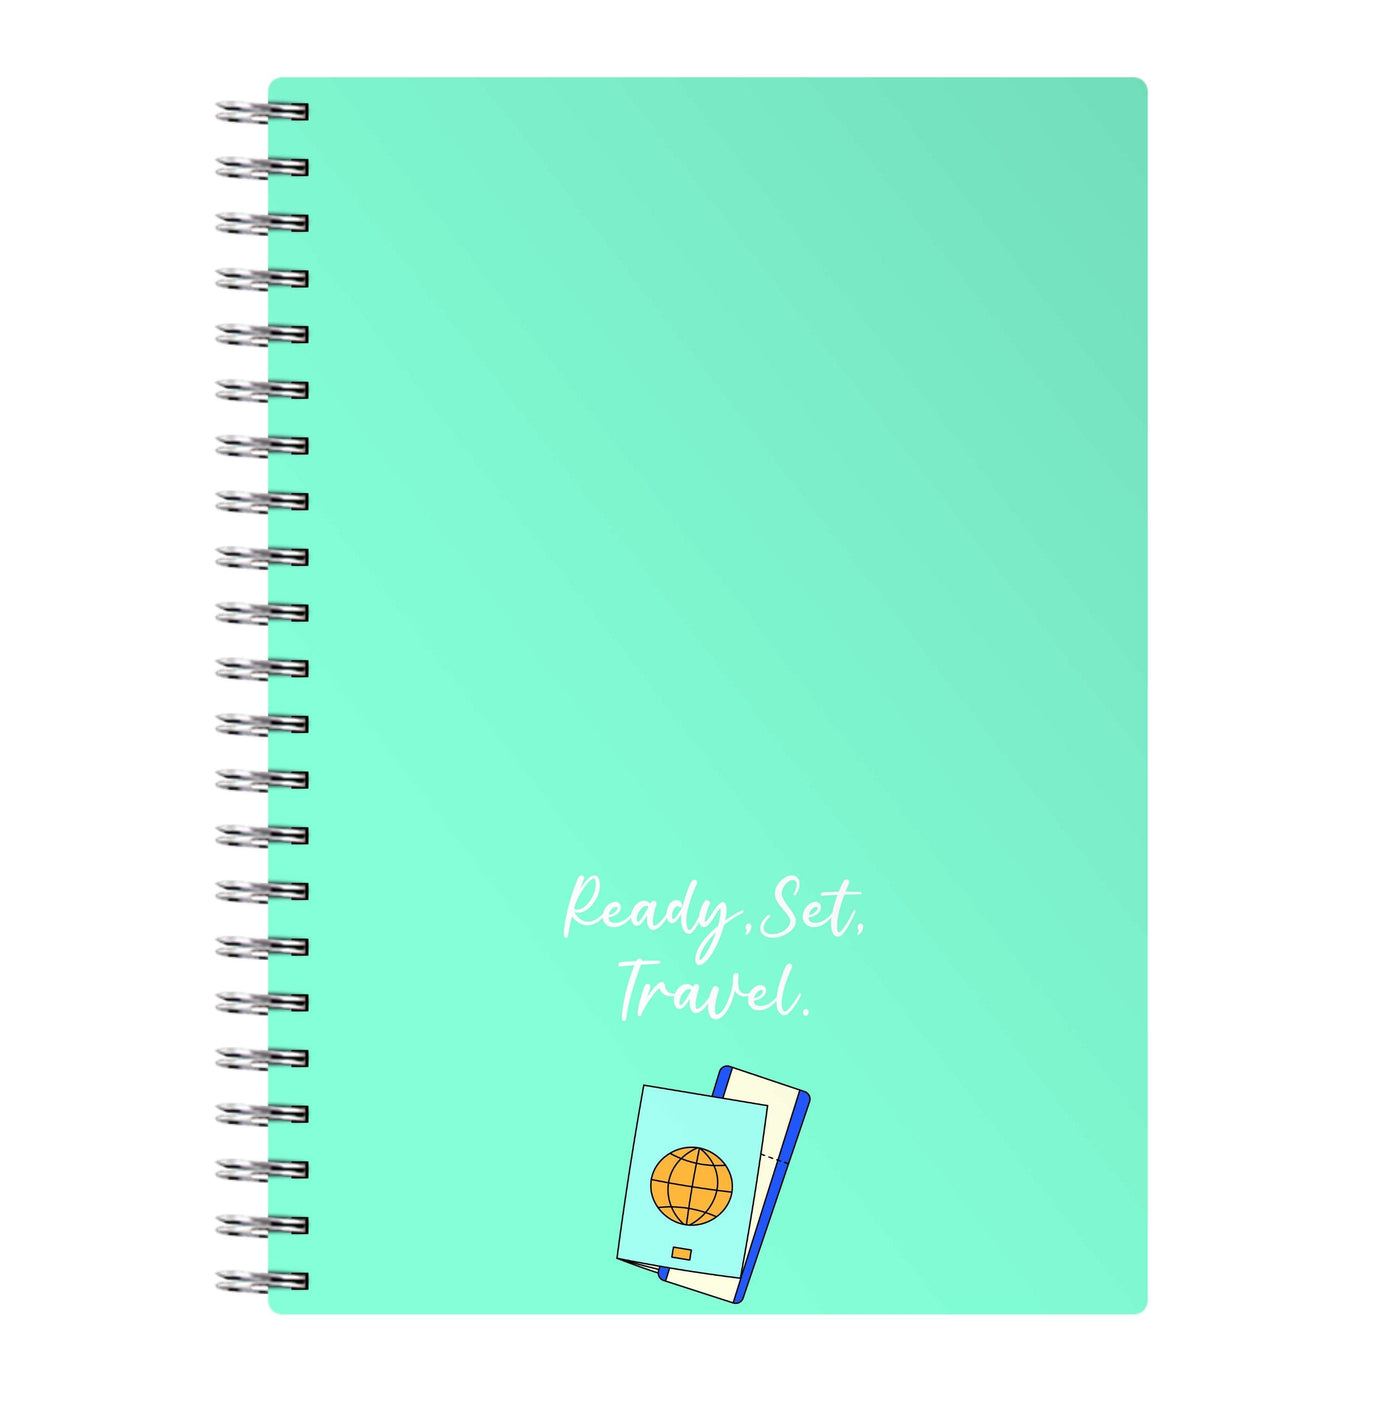 Ready Set Travel - Travel Notebook